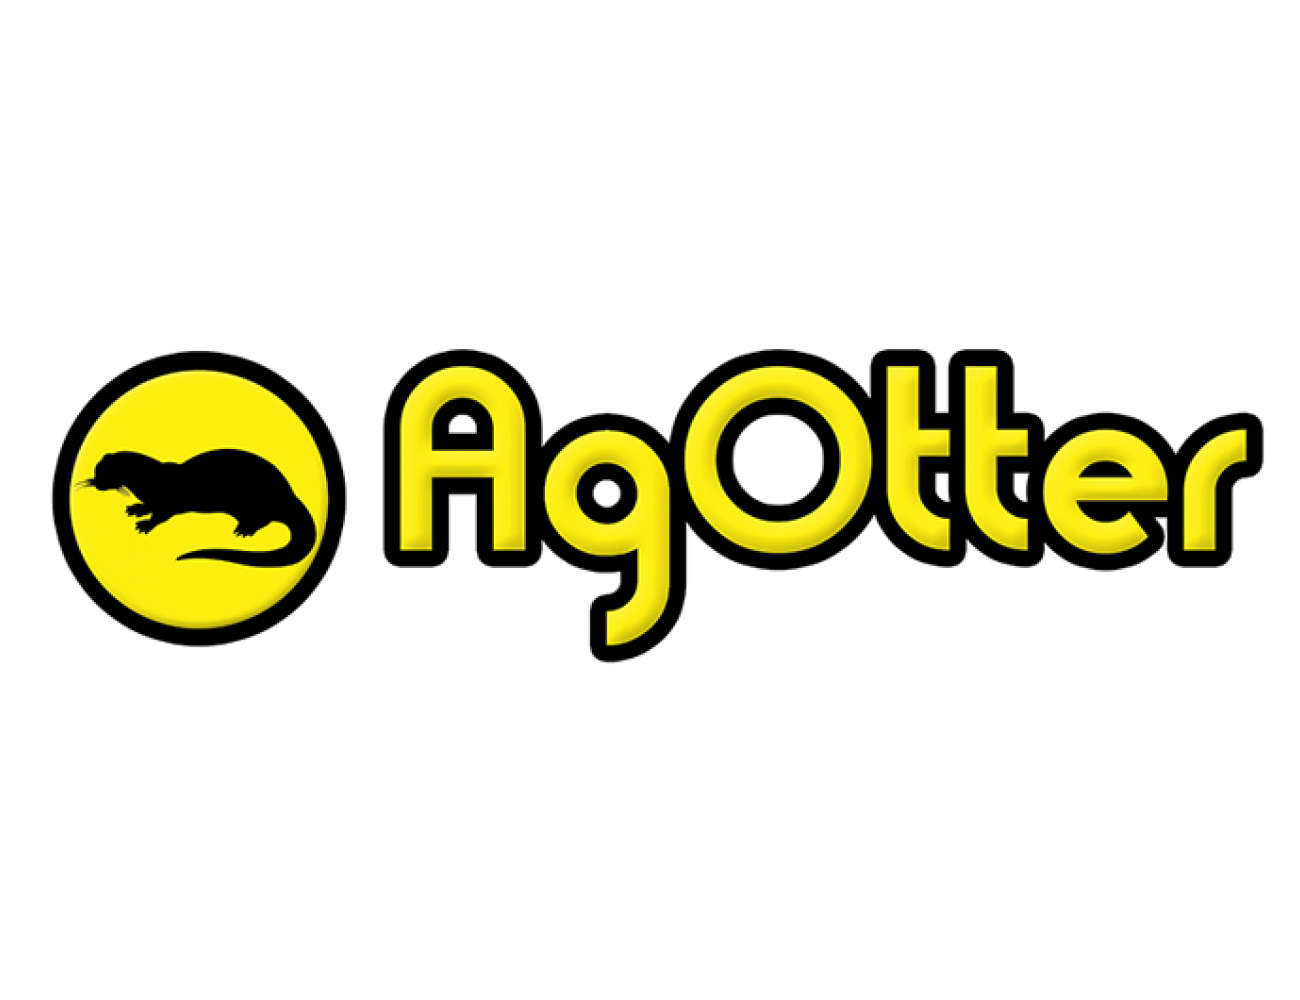 agotter-logo